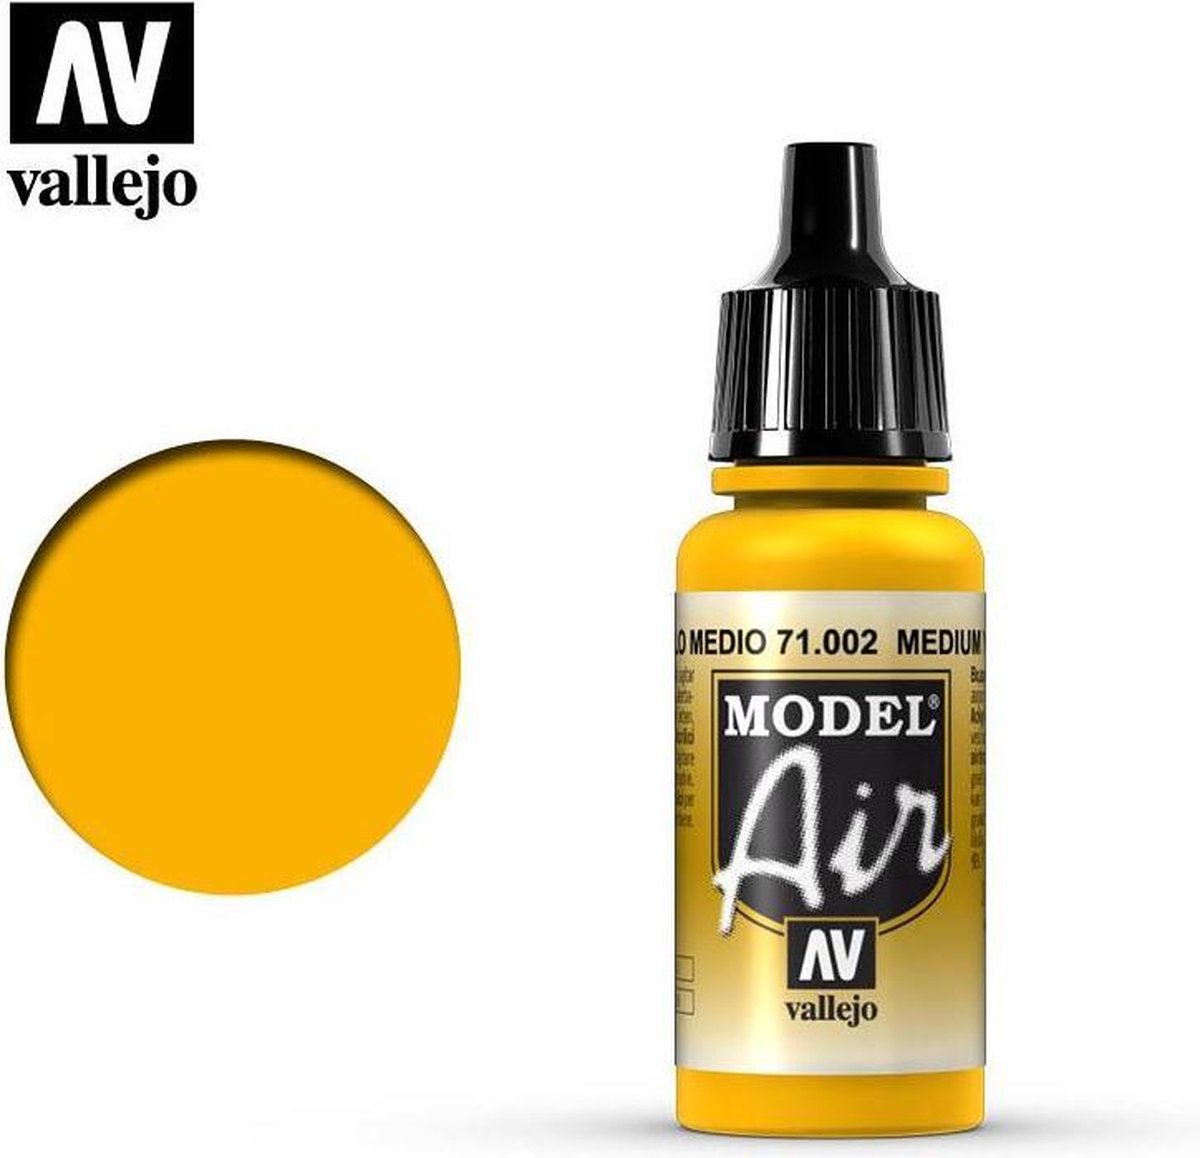 Afbeelding van product Vallejo 71002 Model Air Yellow - Acryl Verf flesje